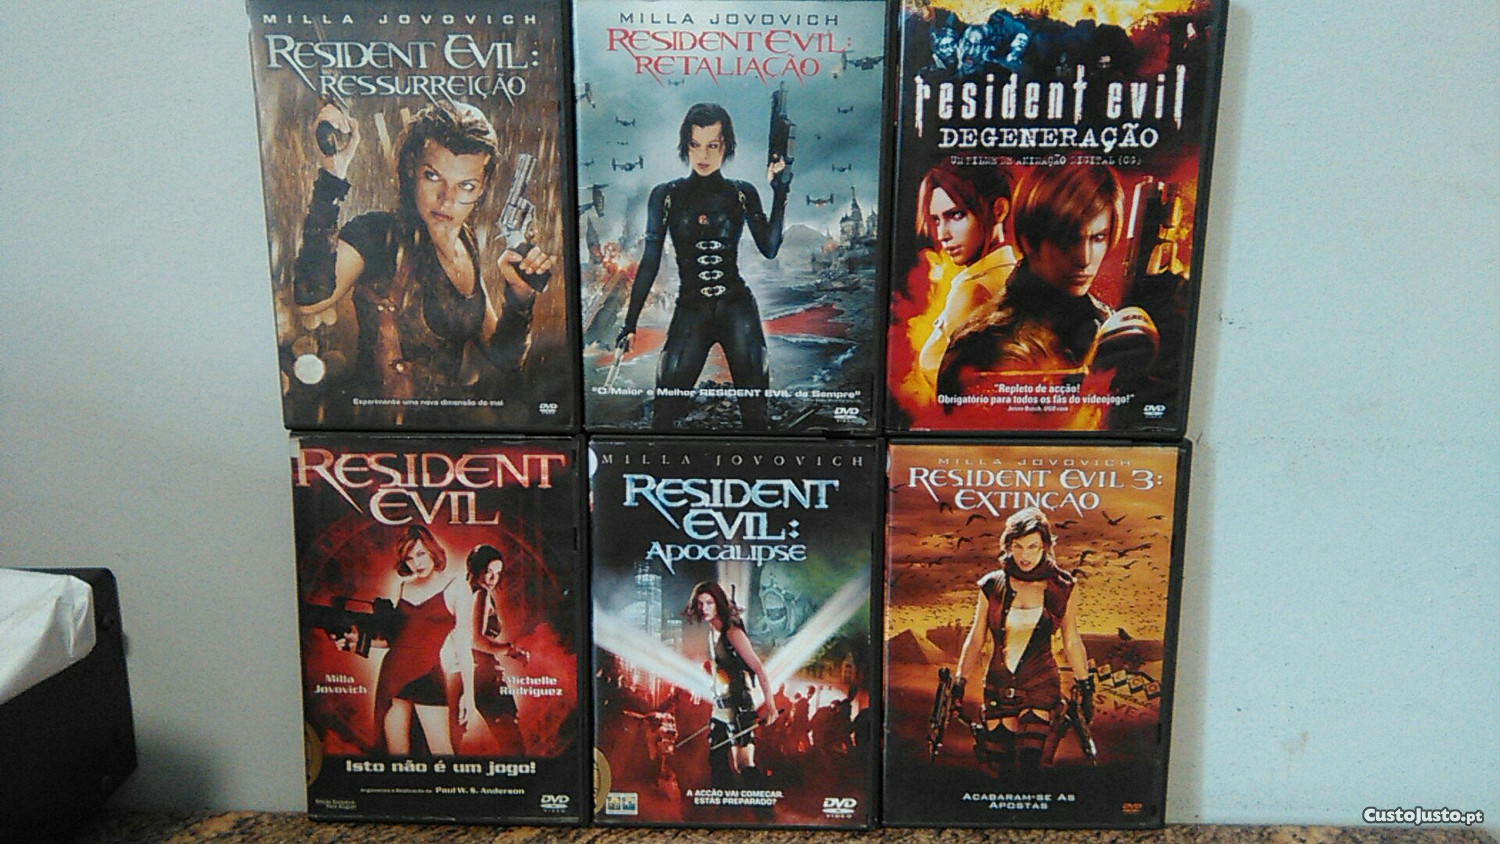 Resident Evil: Extinction (2007) - IMDb